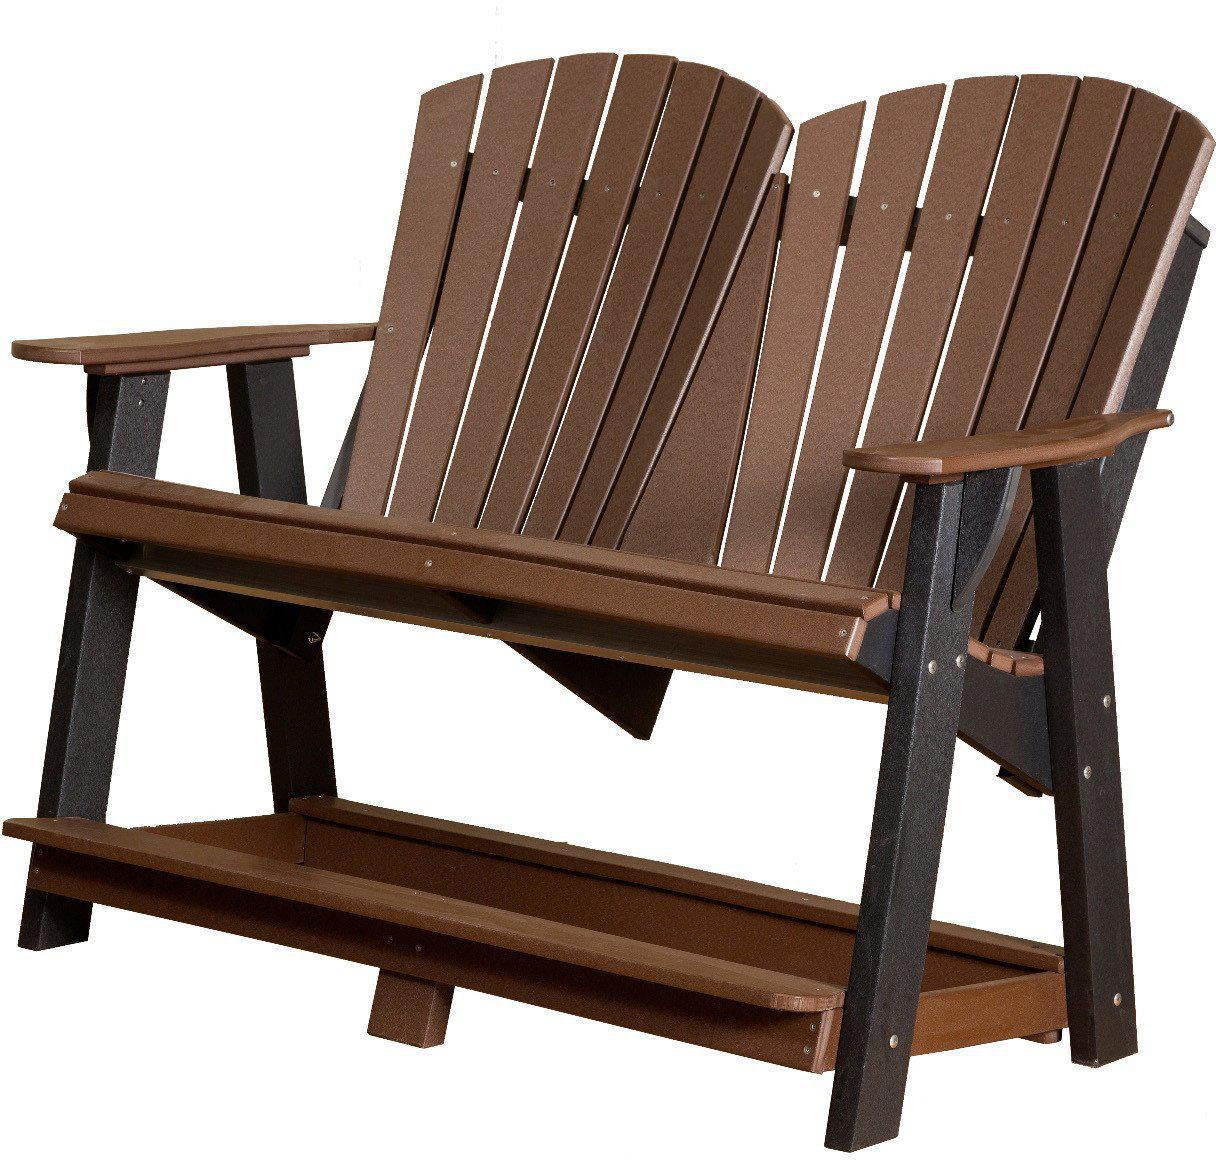 Adirondack Chair - Wildridge Recycled Plastic Heritage Double High Adirondack Bench